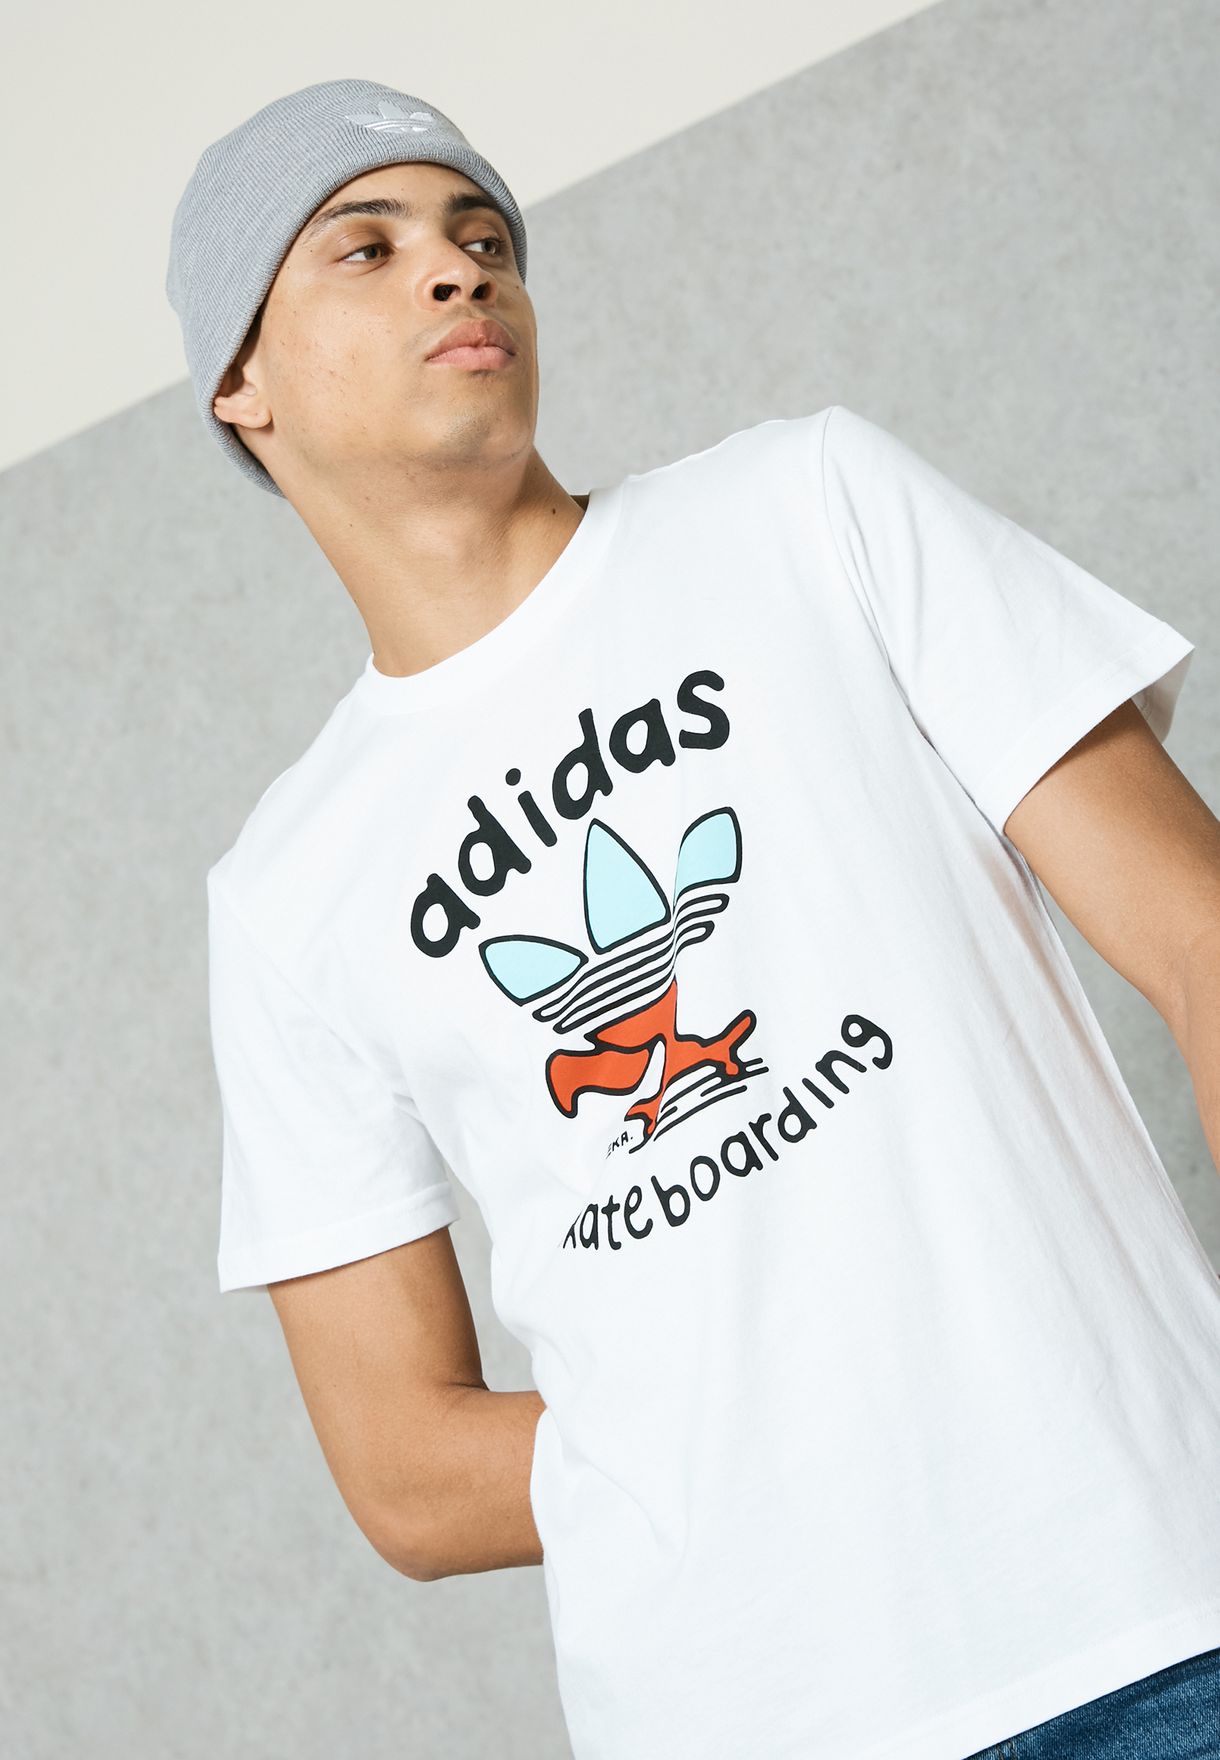 adidas skateboarding t shirt